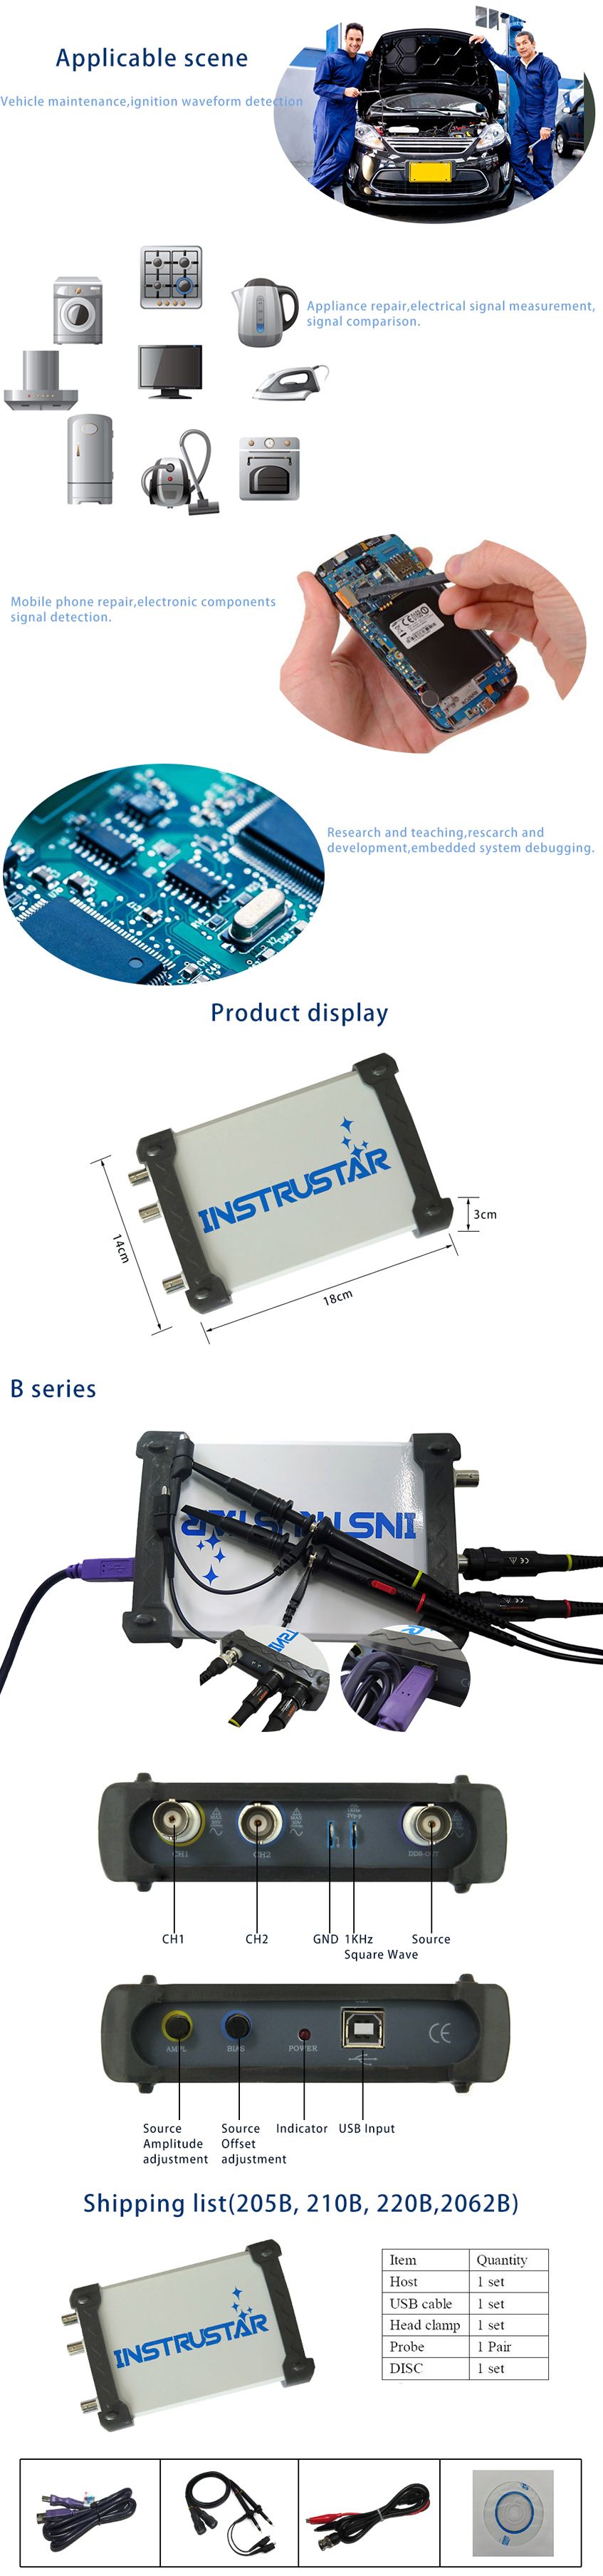 ISDS205B-5-in-1-Multifunctional-PC-Based-USB-Digital-Oscilloscop--Spectrum-Analyzer--Data-Recorder---1103053